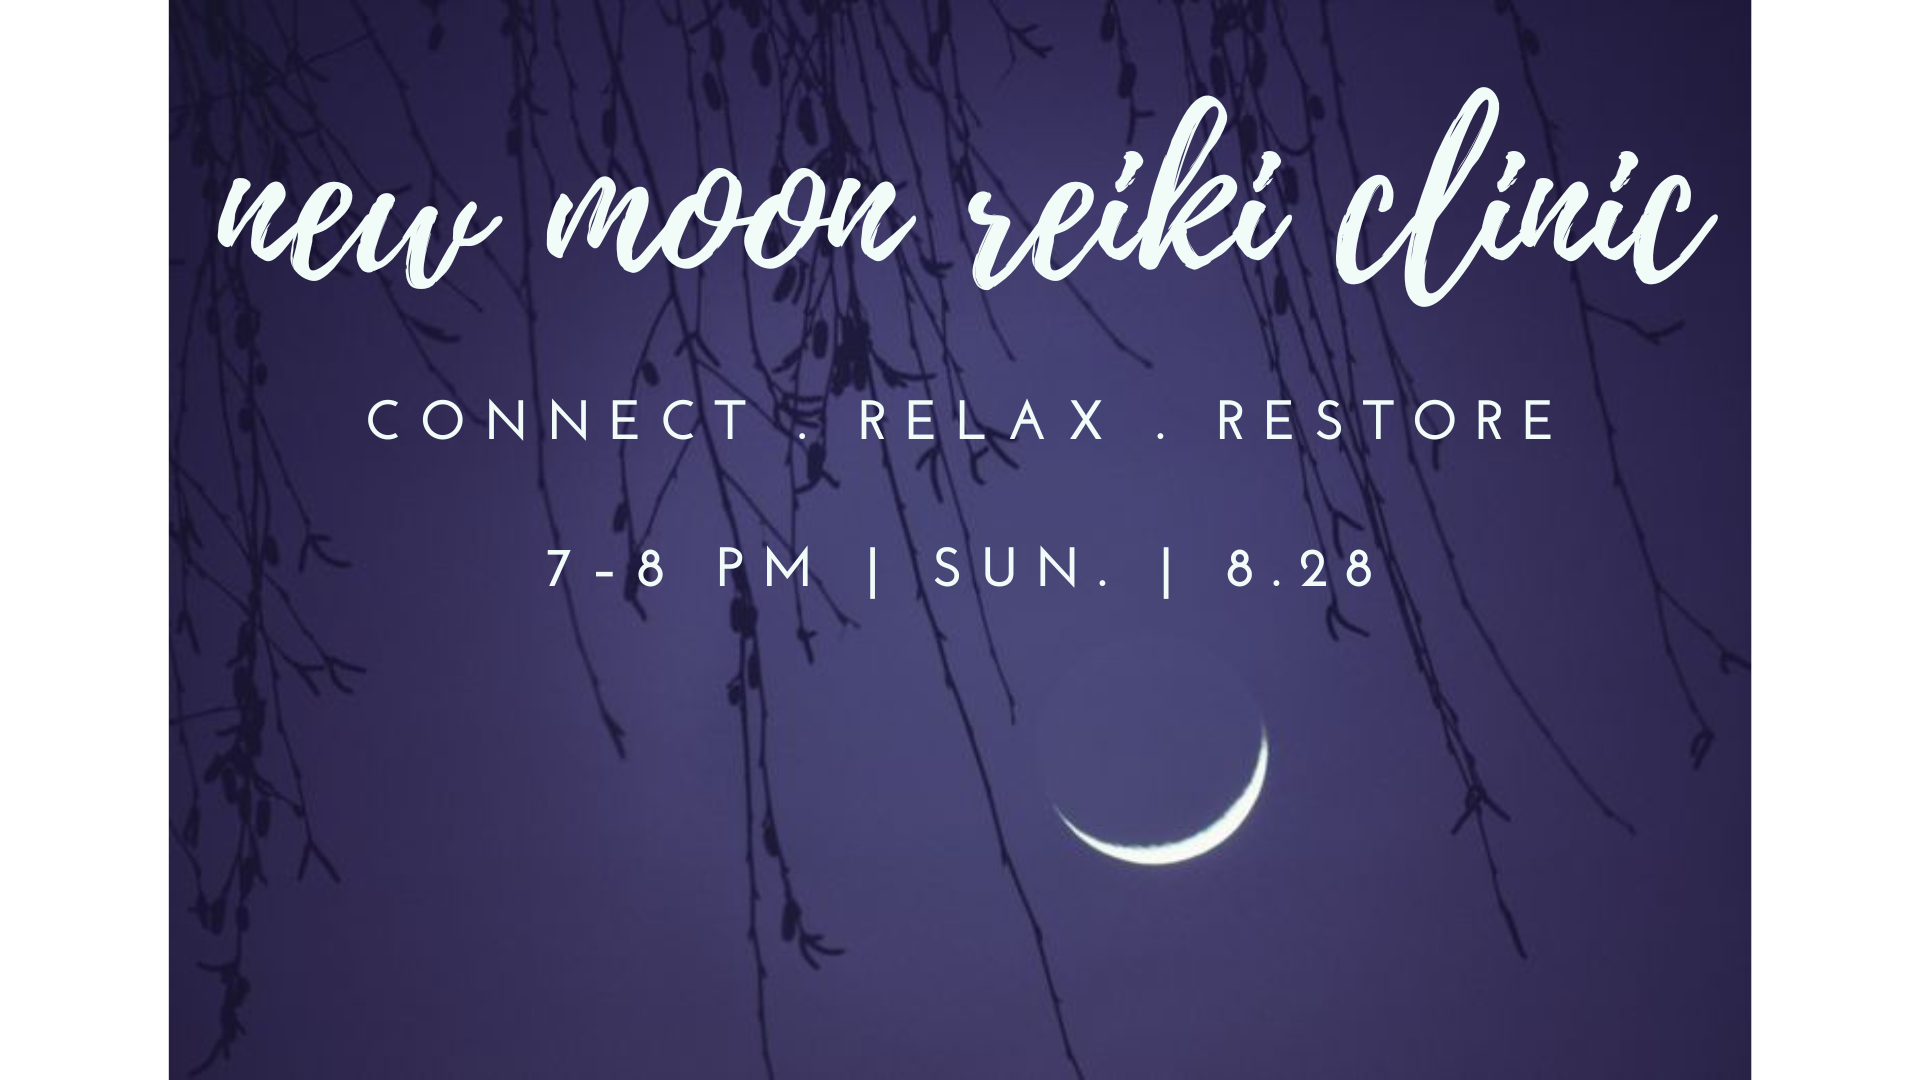 ZM New Moon Reiki Clinic 8-28 (FB Event)